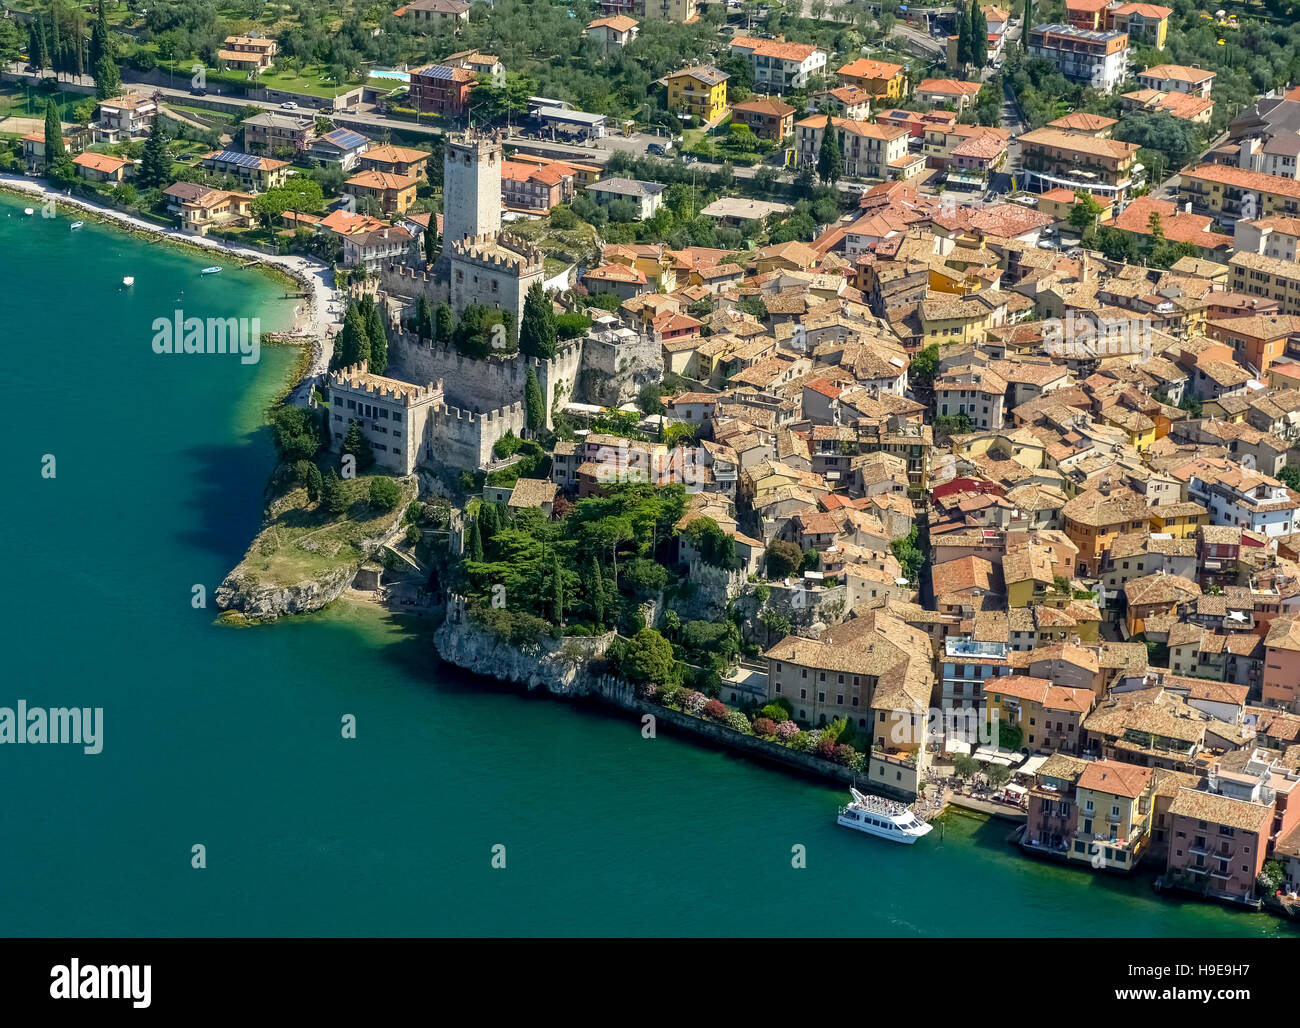 Vista aérea, Castello di Malcesine, Malcesine Castillo, el Lago de Garda, el Lago di Garda, Malcesine, al norte de Italia, Veneto, Italia, Foto de stock